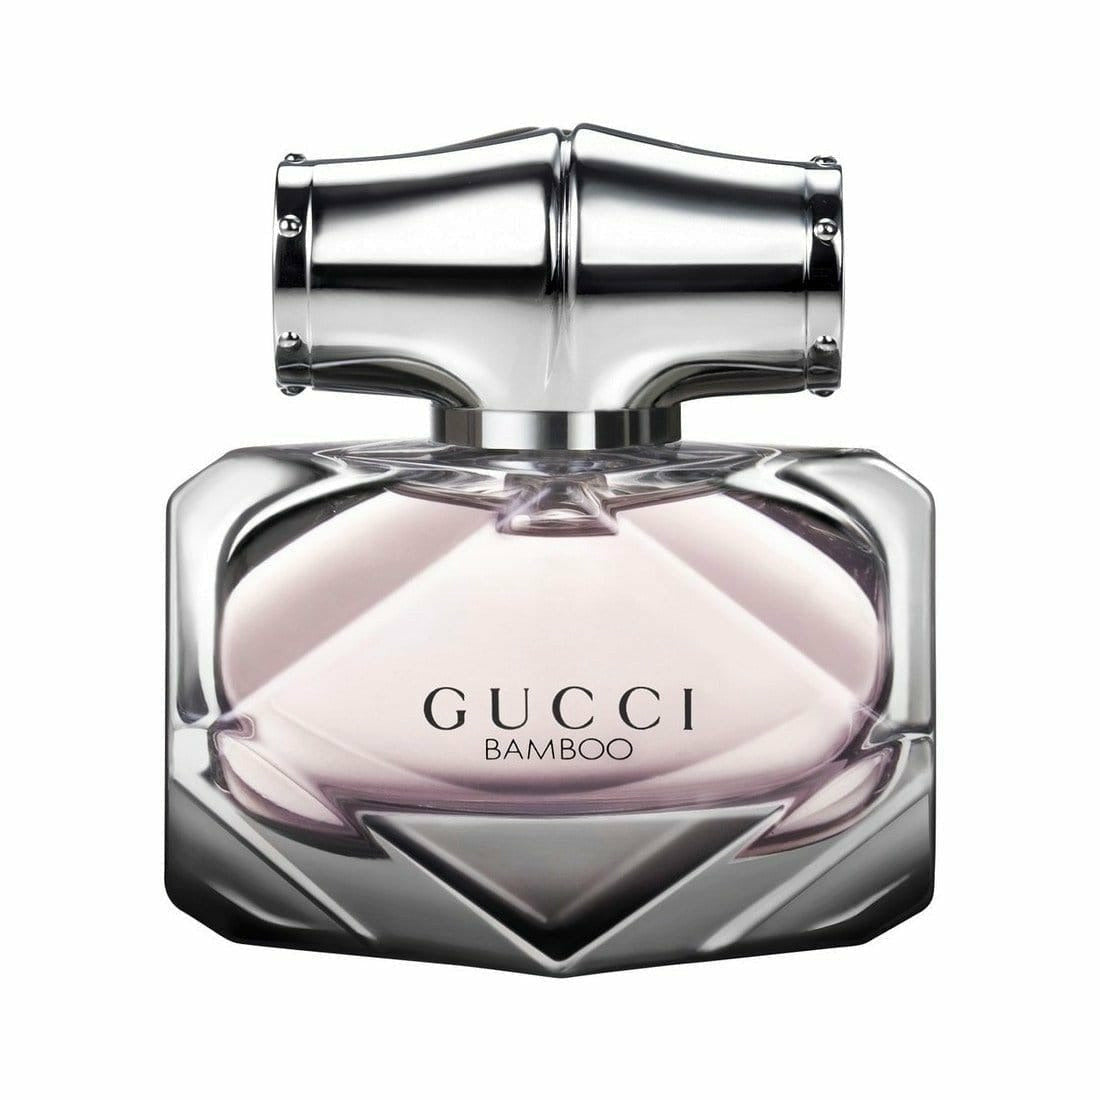 Gucci Bamboo Eau de Parfum Spray - 50ml